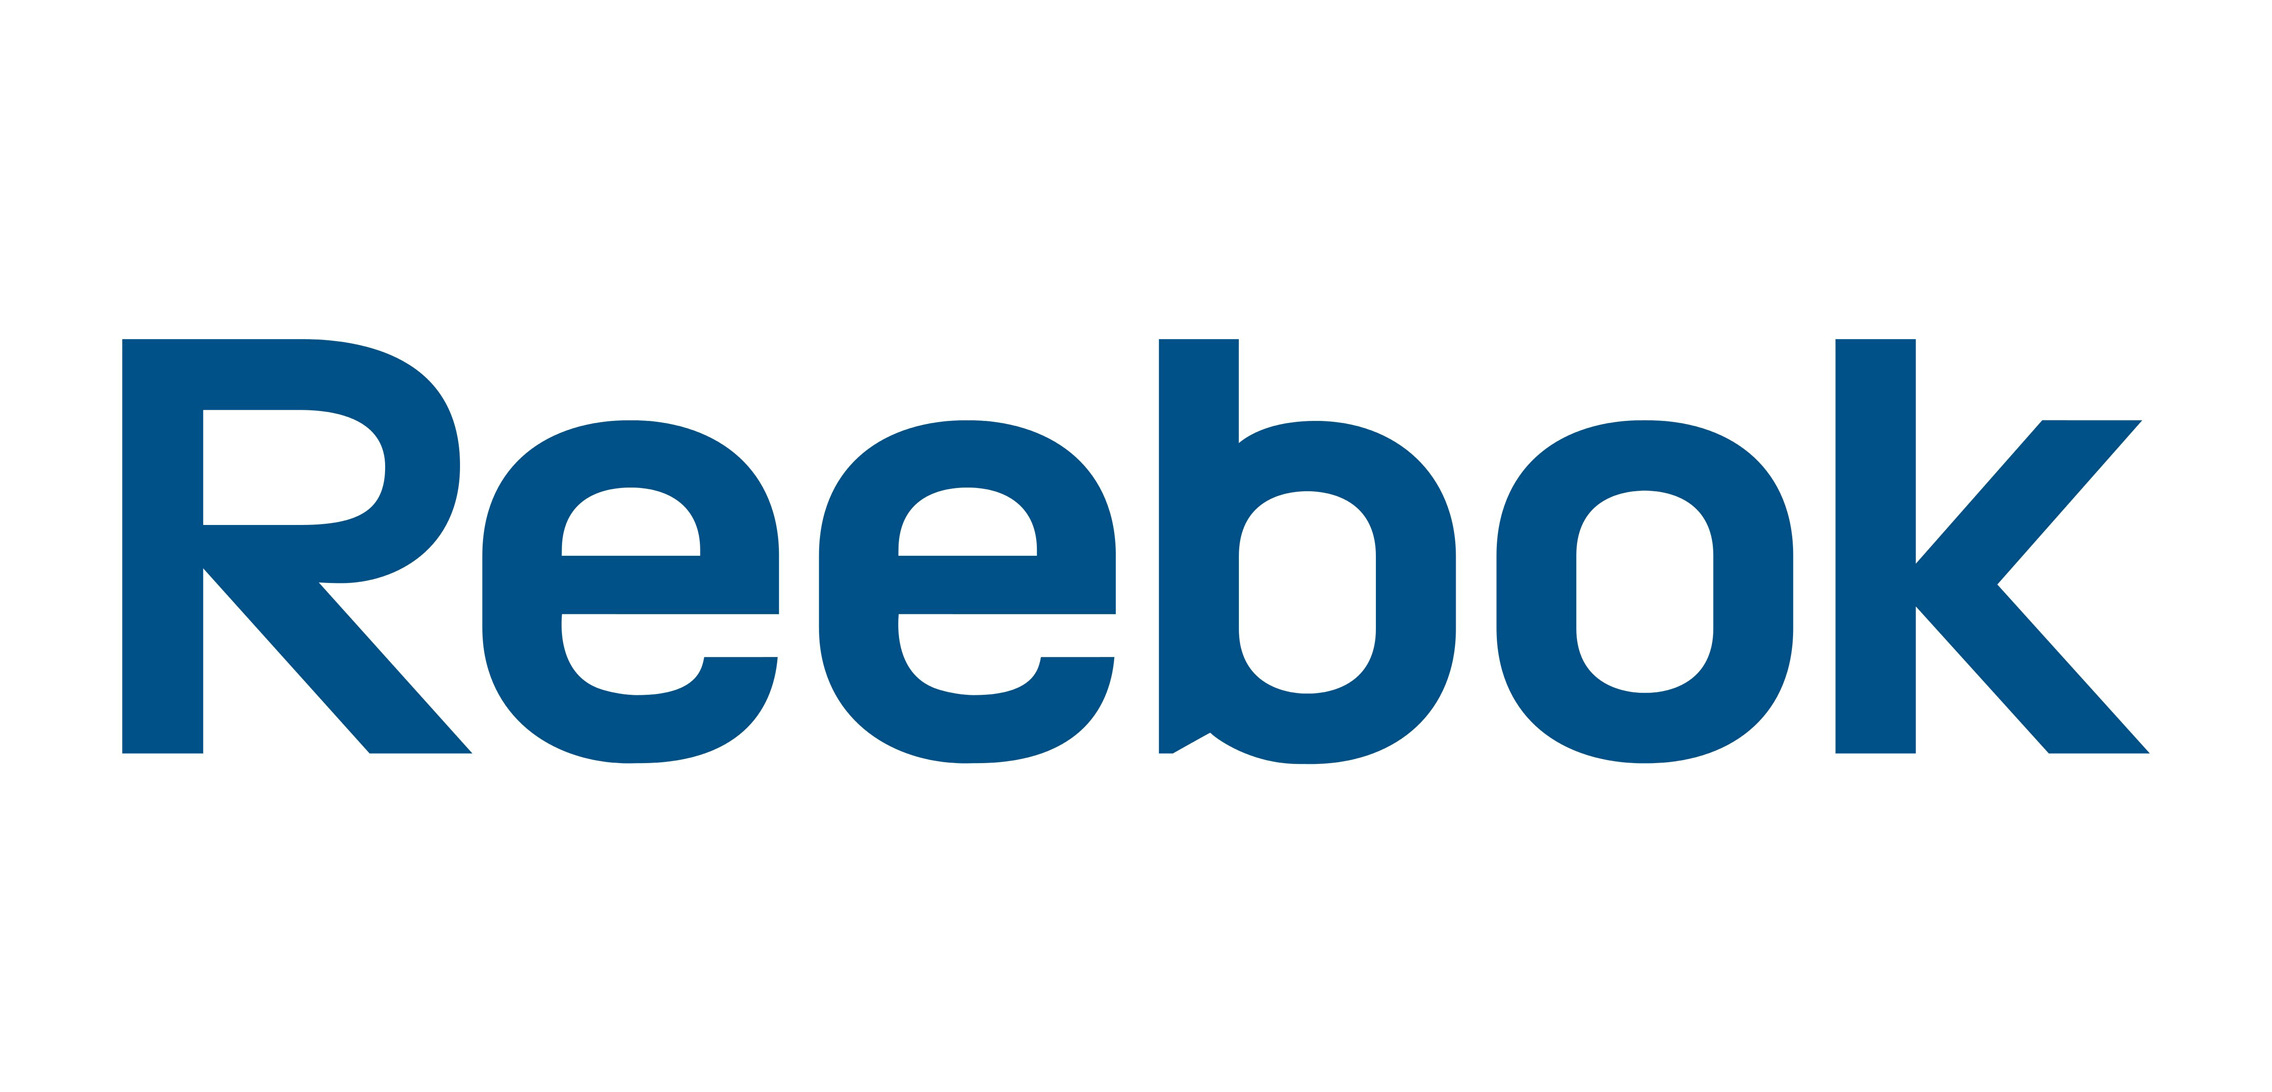 Reebok: 2008-2014 logo and symbol, World headquarters located in Boston, Massachusetts. 2280x1100 Dual Screen Background.